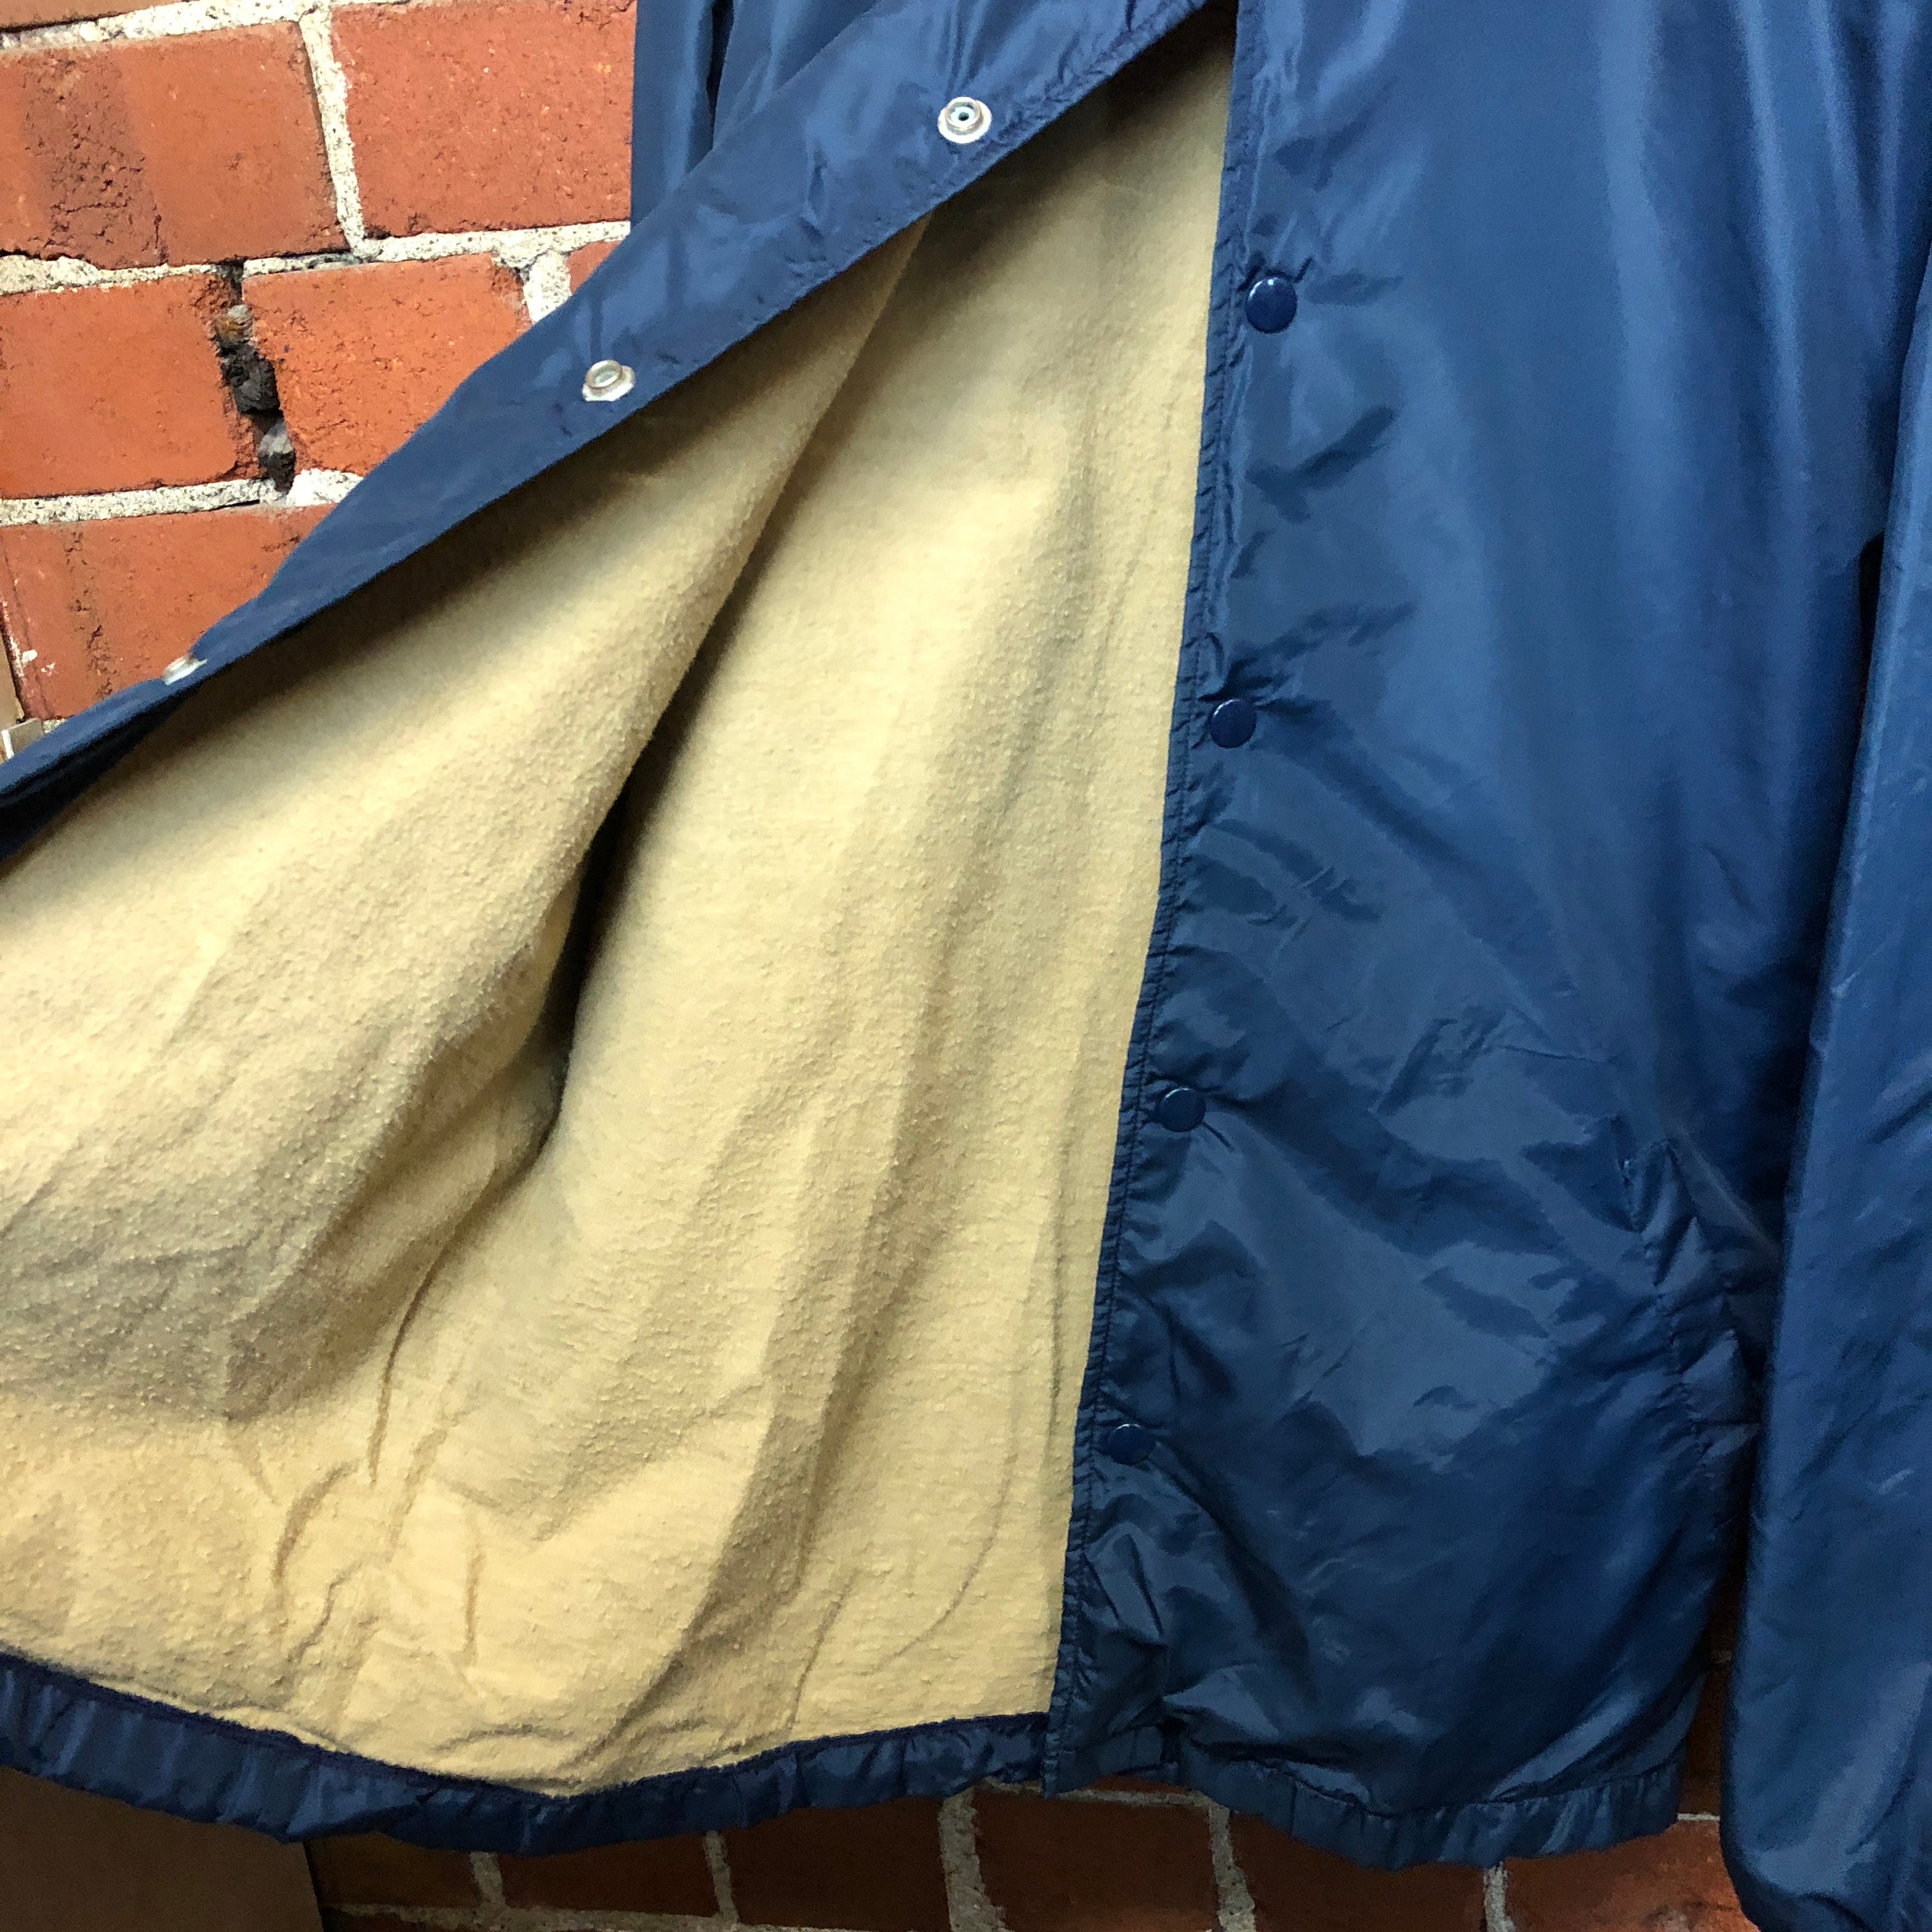 L L BEANE retro nylon outer cotton lined jacket